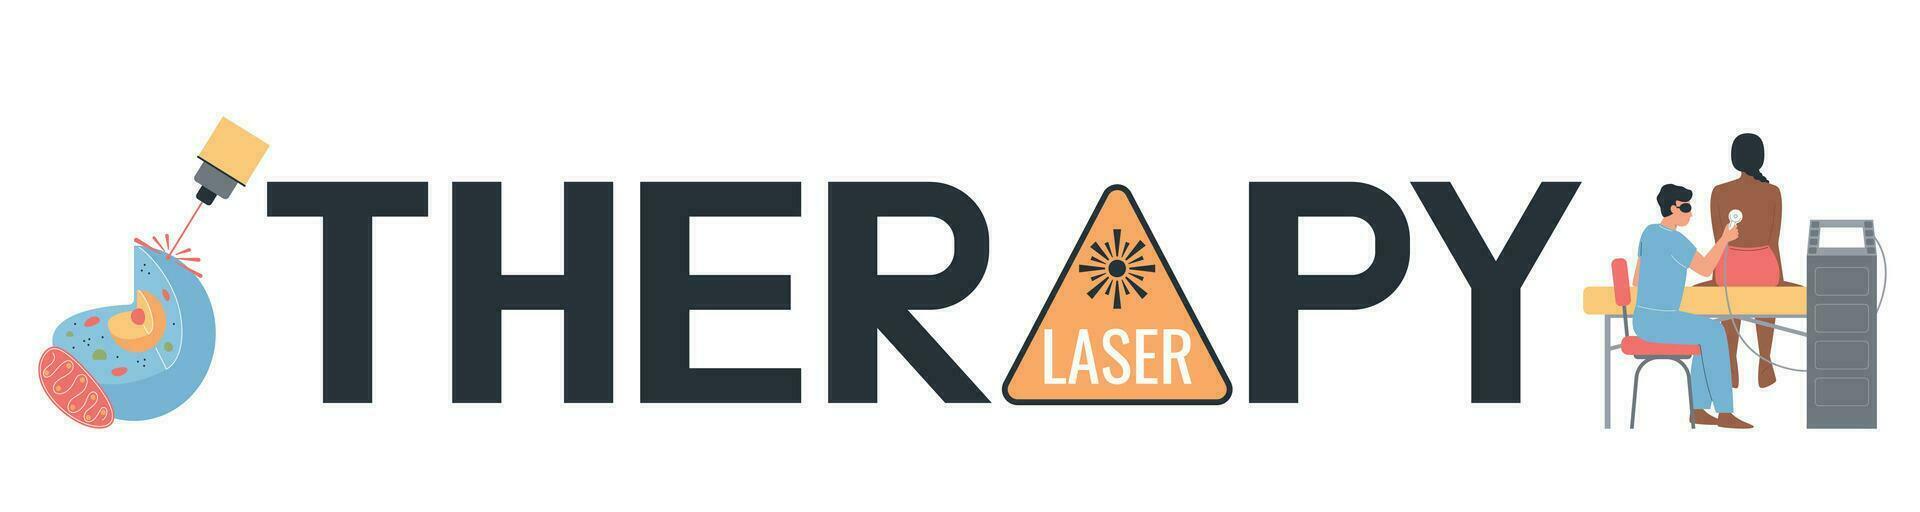 Laser- Therapie Text Komposition vektor